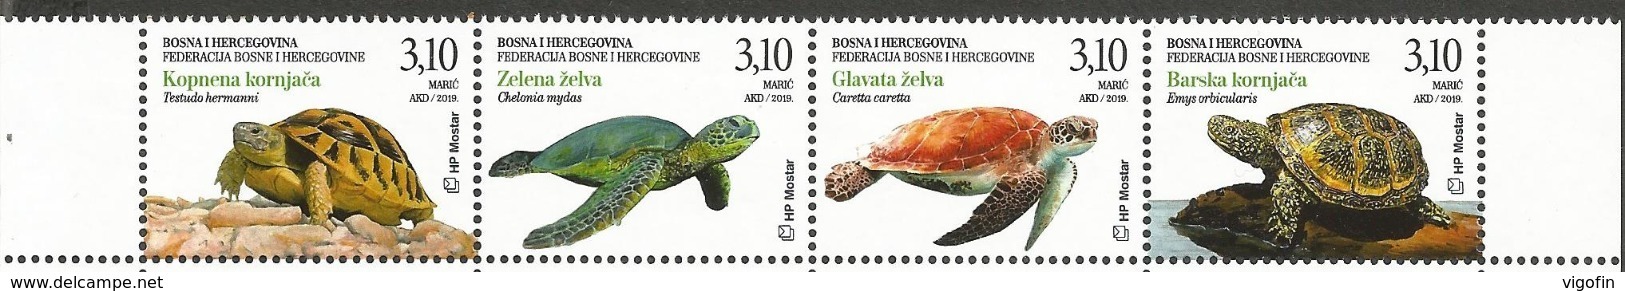 BHHB 2019-17 FAUNA TURTLES, BOSNA AND HERCEGOVINA HERCEGBOSNA CROAT, 4v, MNH - Schildpadden